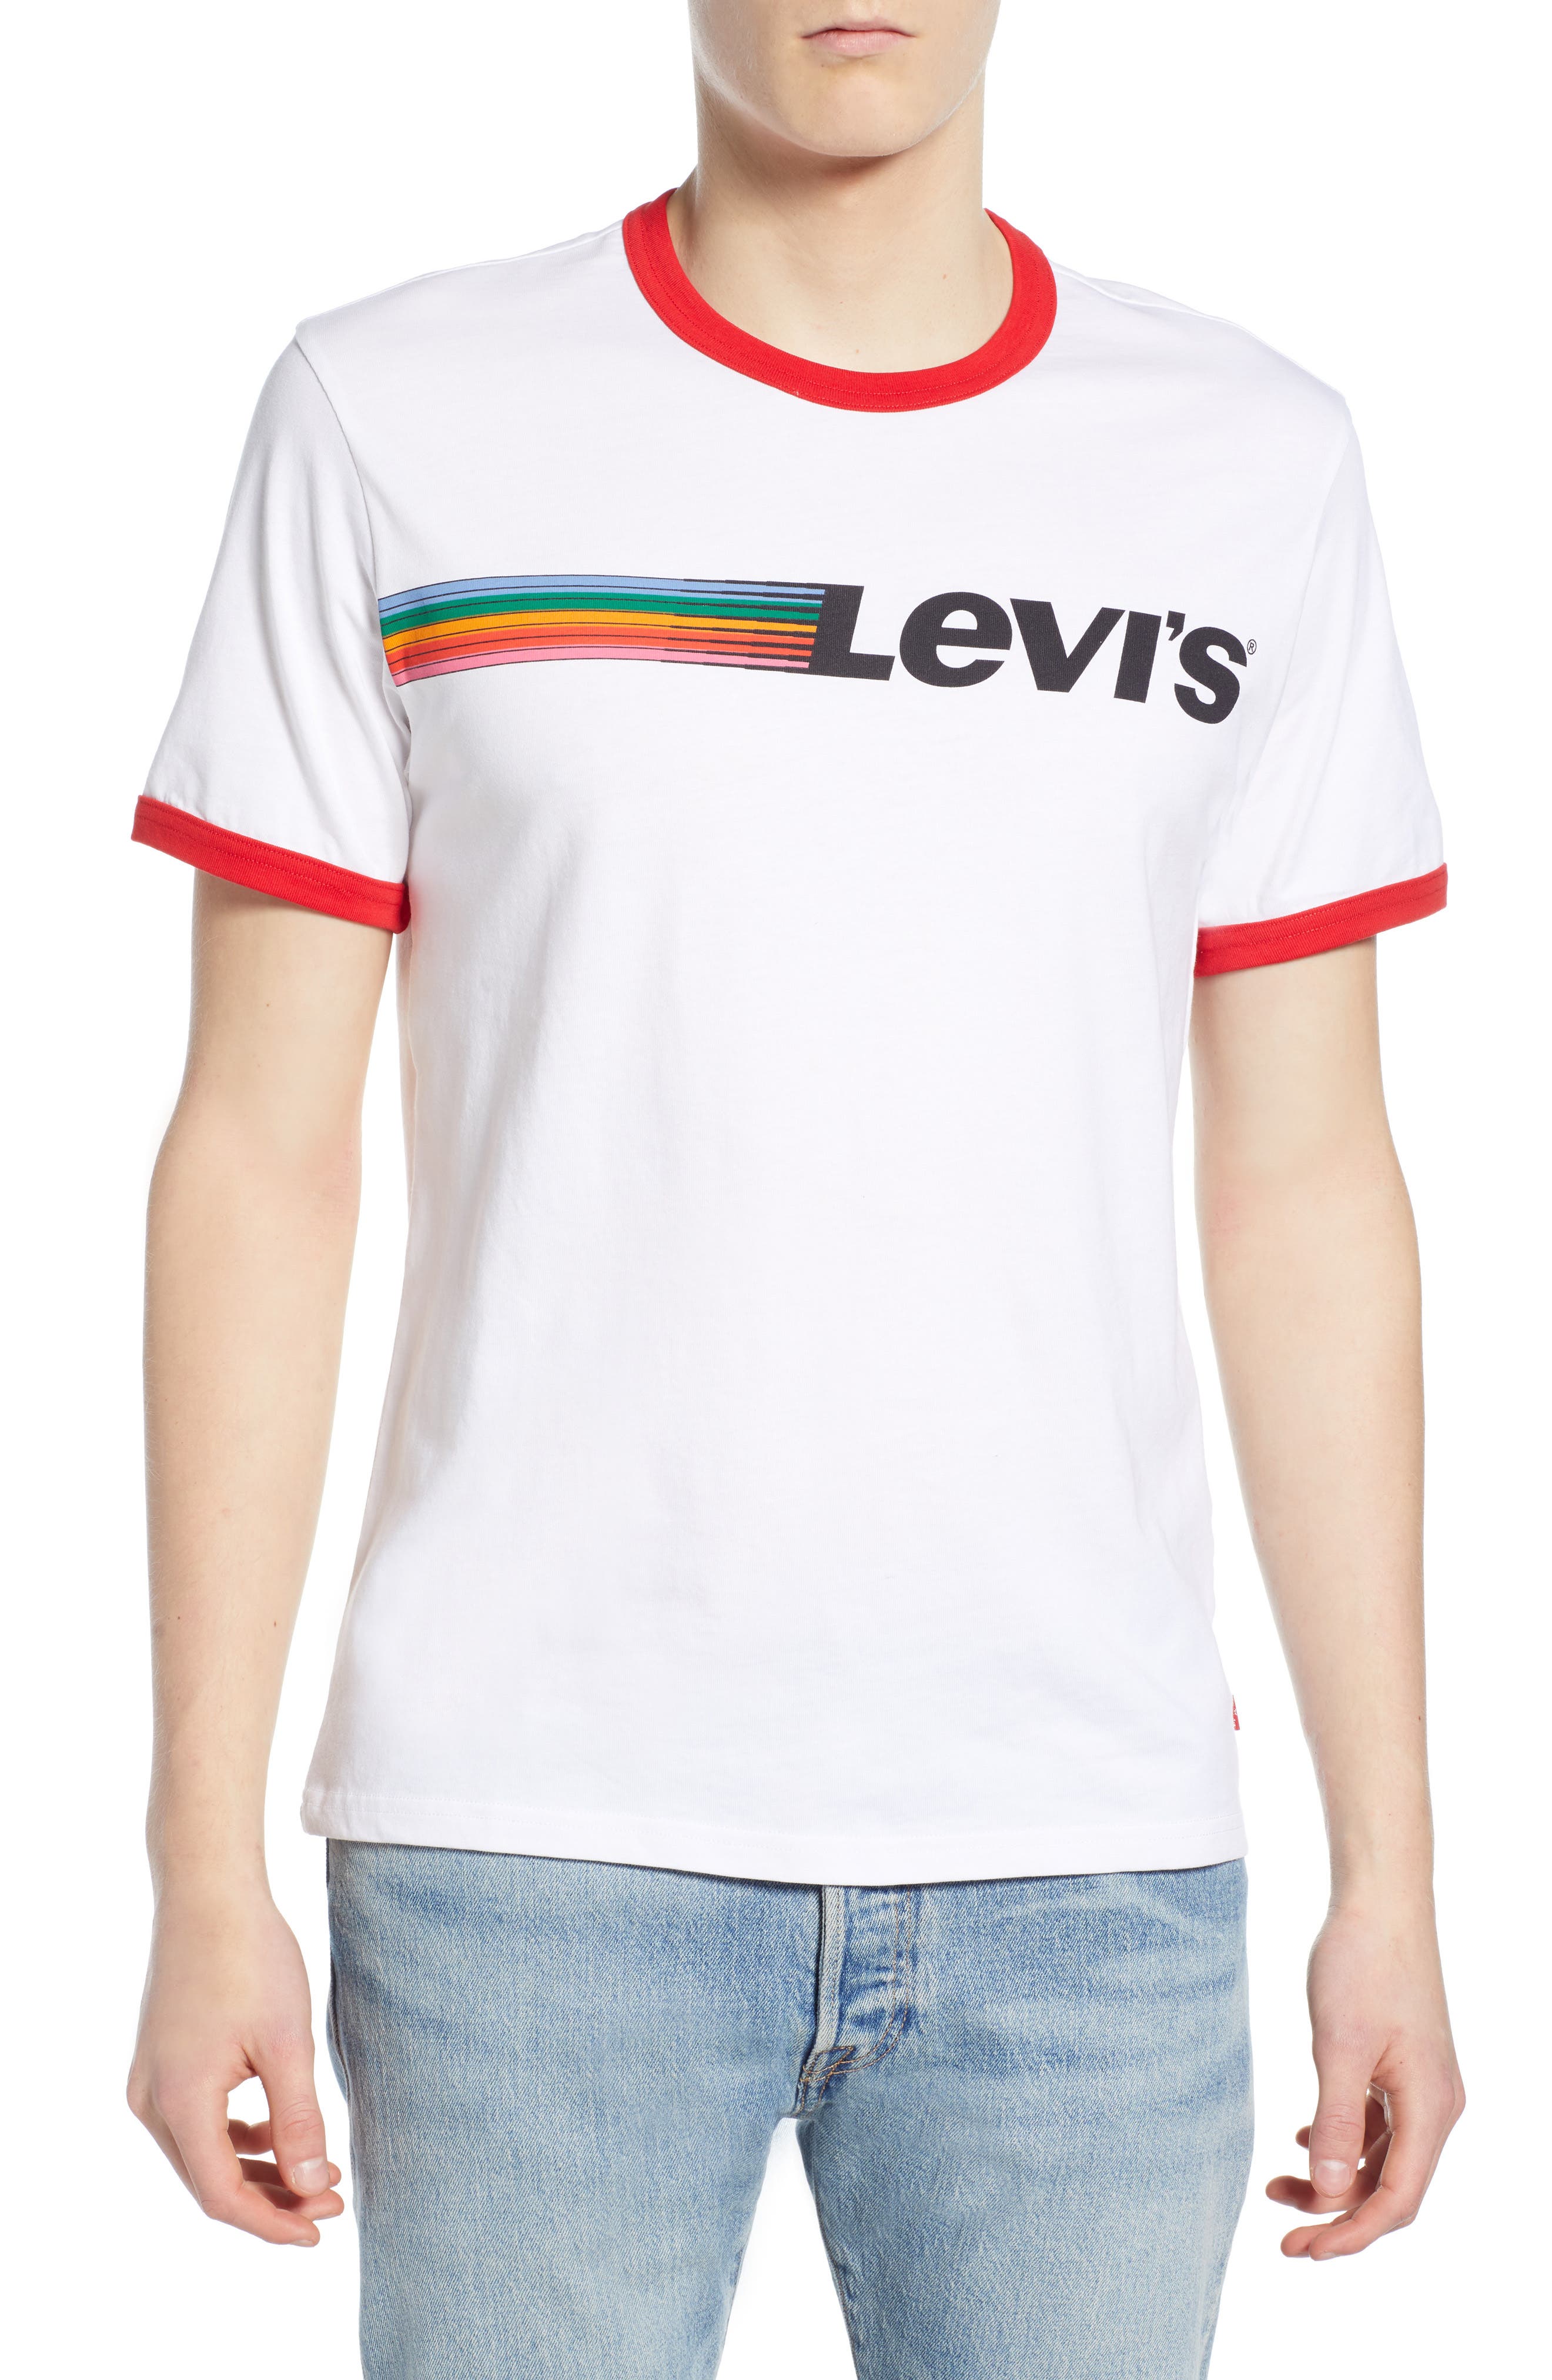 levi's pride shirt